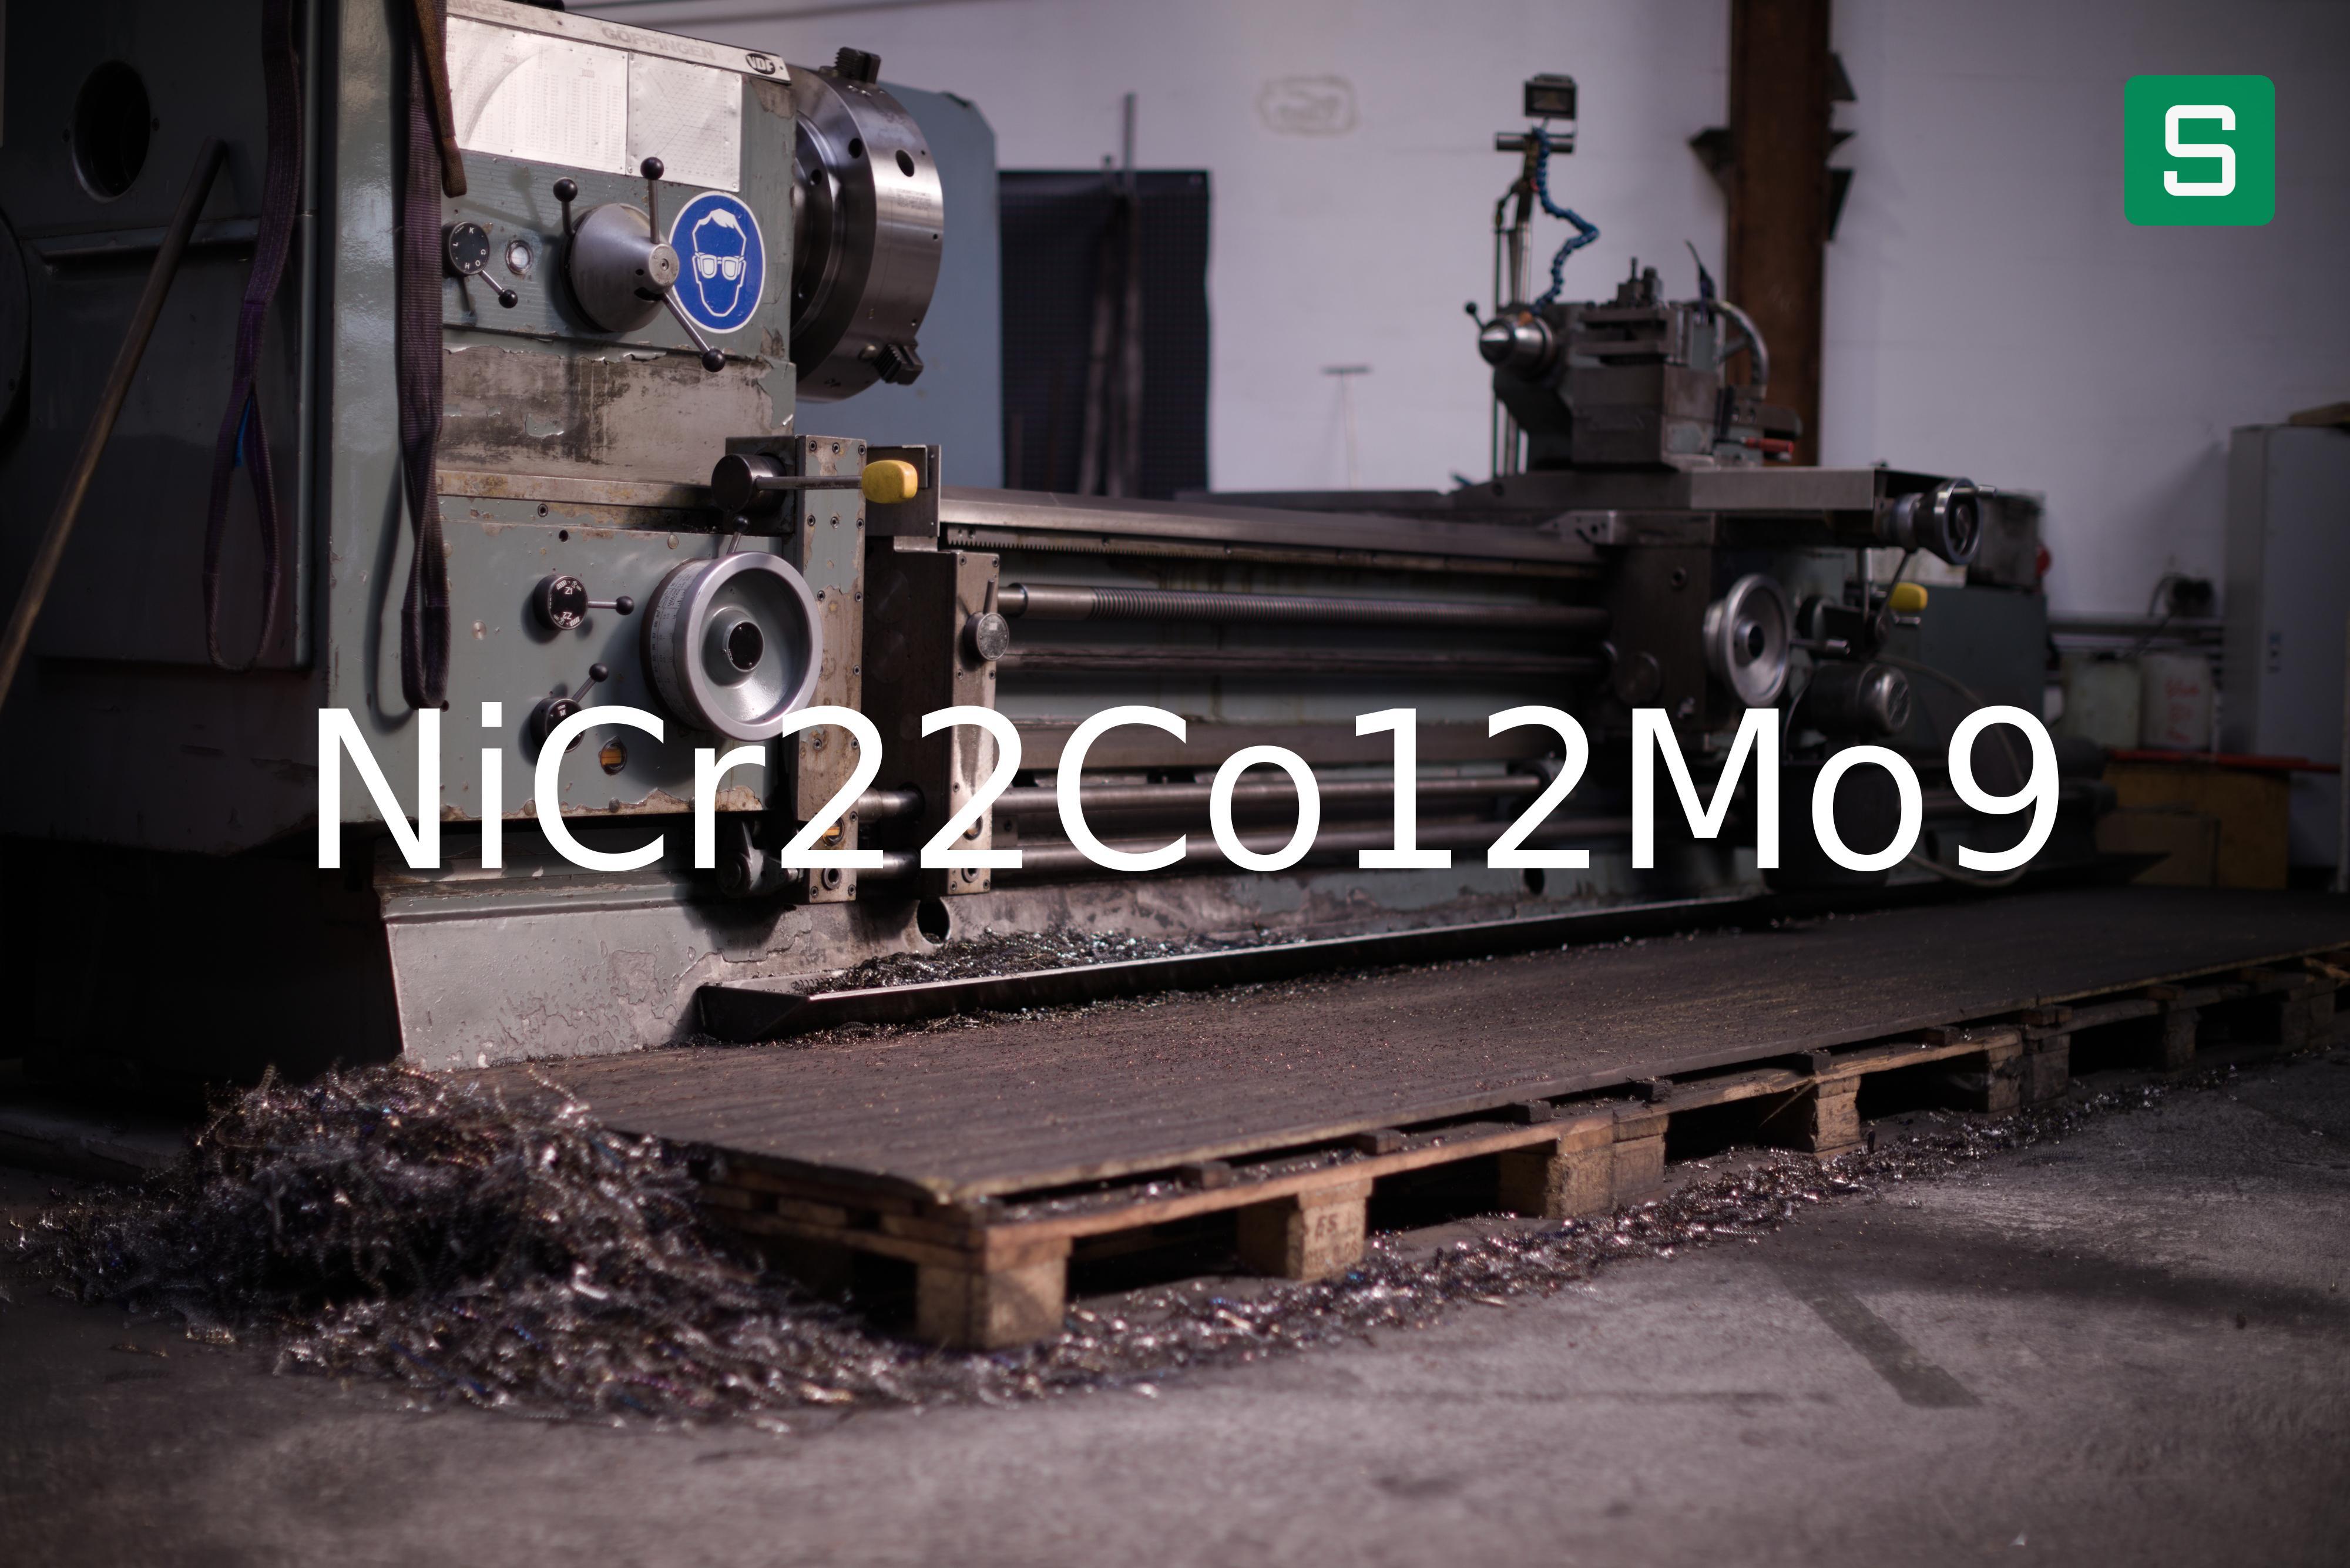 Stahlwerkstoff: NiCr22Co12Mo9